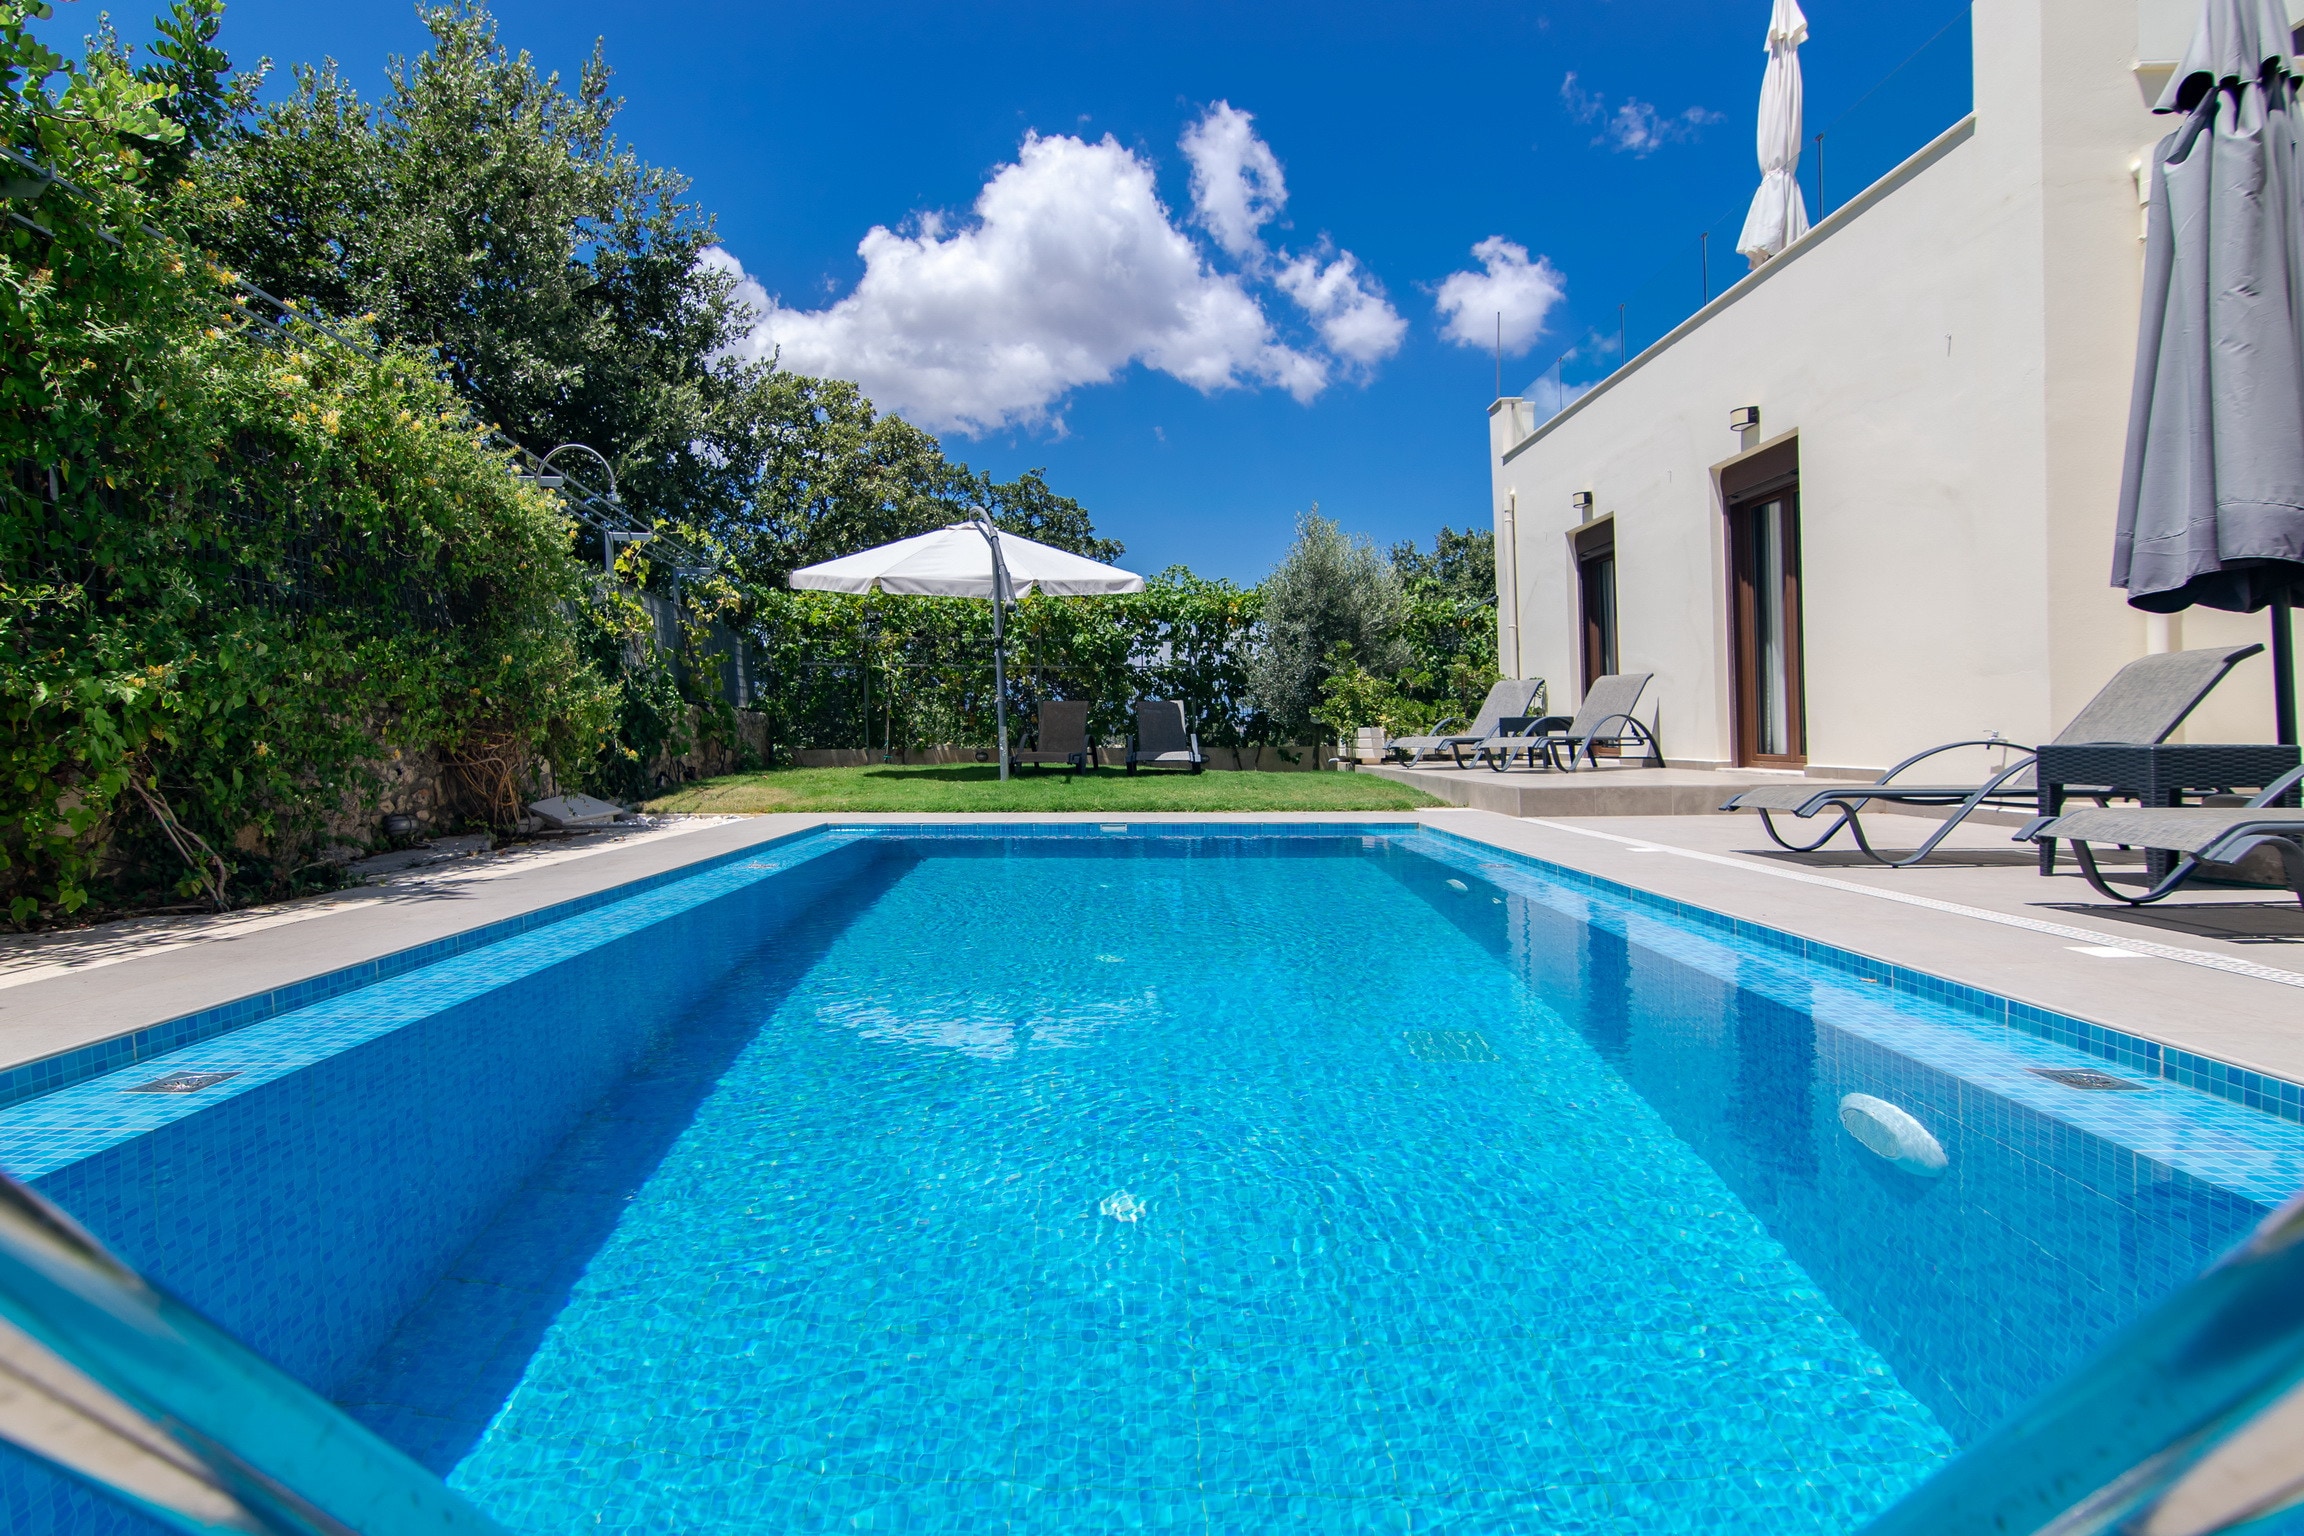 Swimming pool area of Large modern villa,Private Swimming pool,Rethymno,Crete